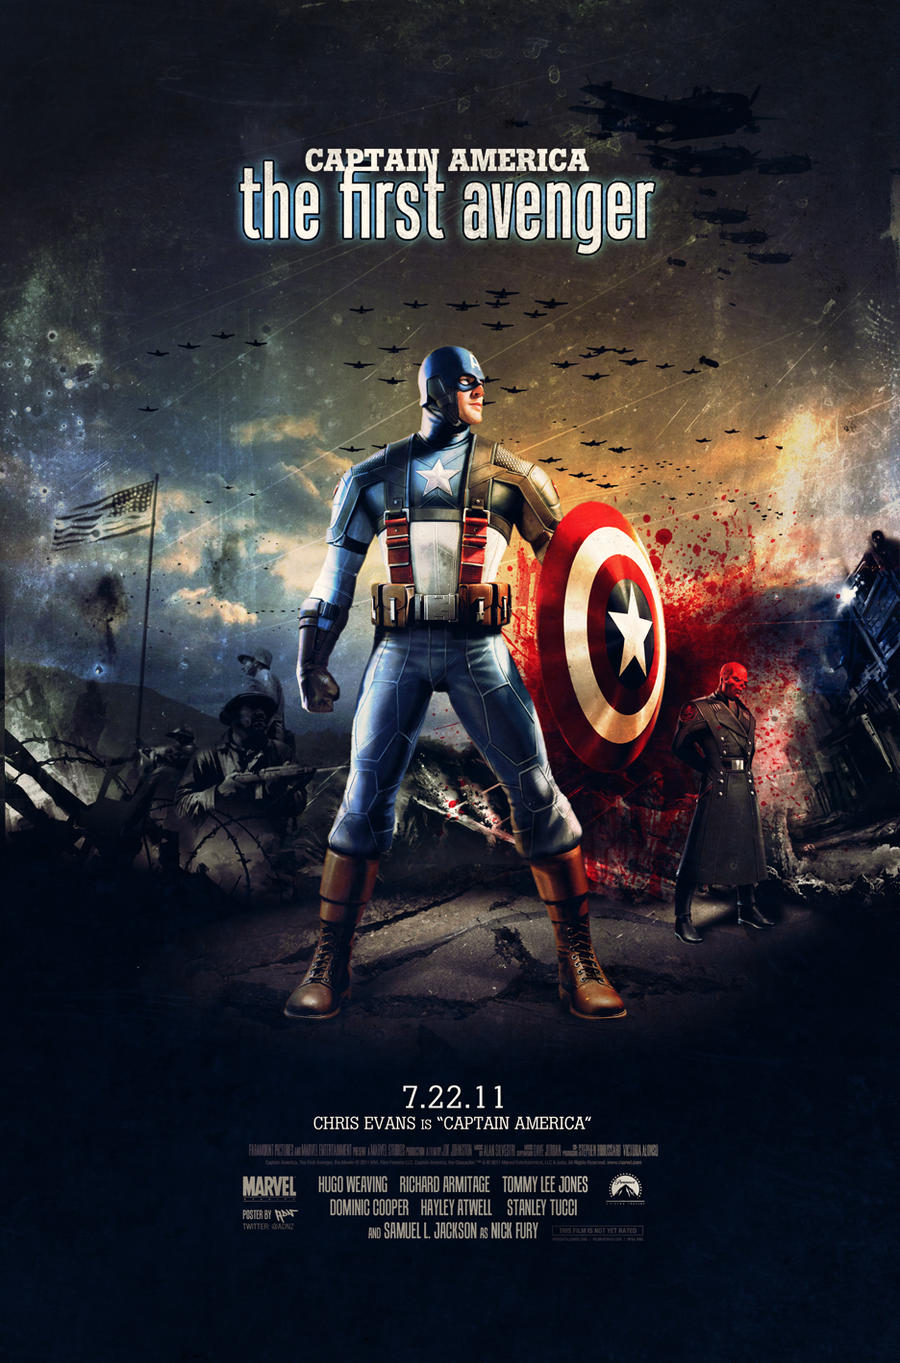 http://fc00.deviantart.net/fs70/i/2011/122/f/a/captain_america_movie_poster_by_adn_z-d3feasn.jpg